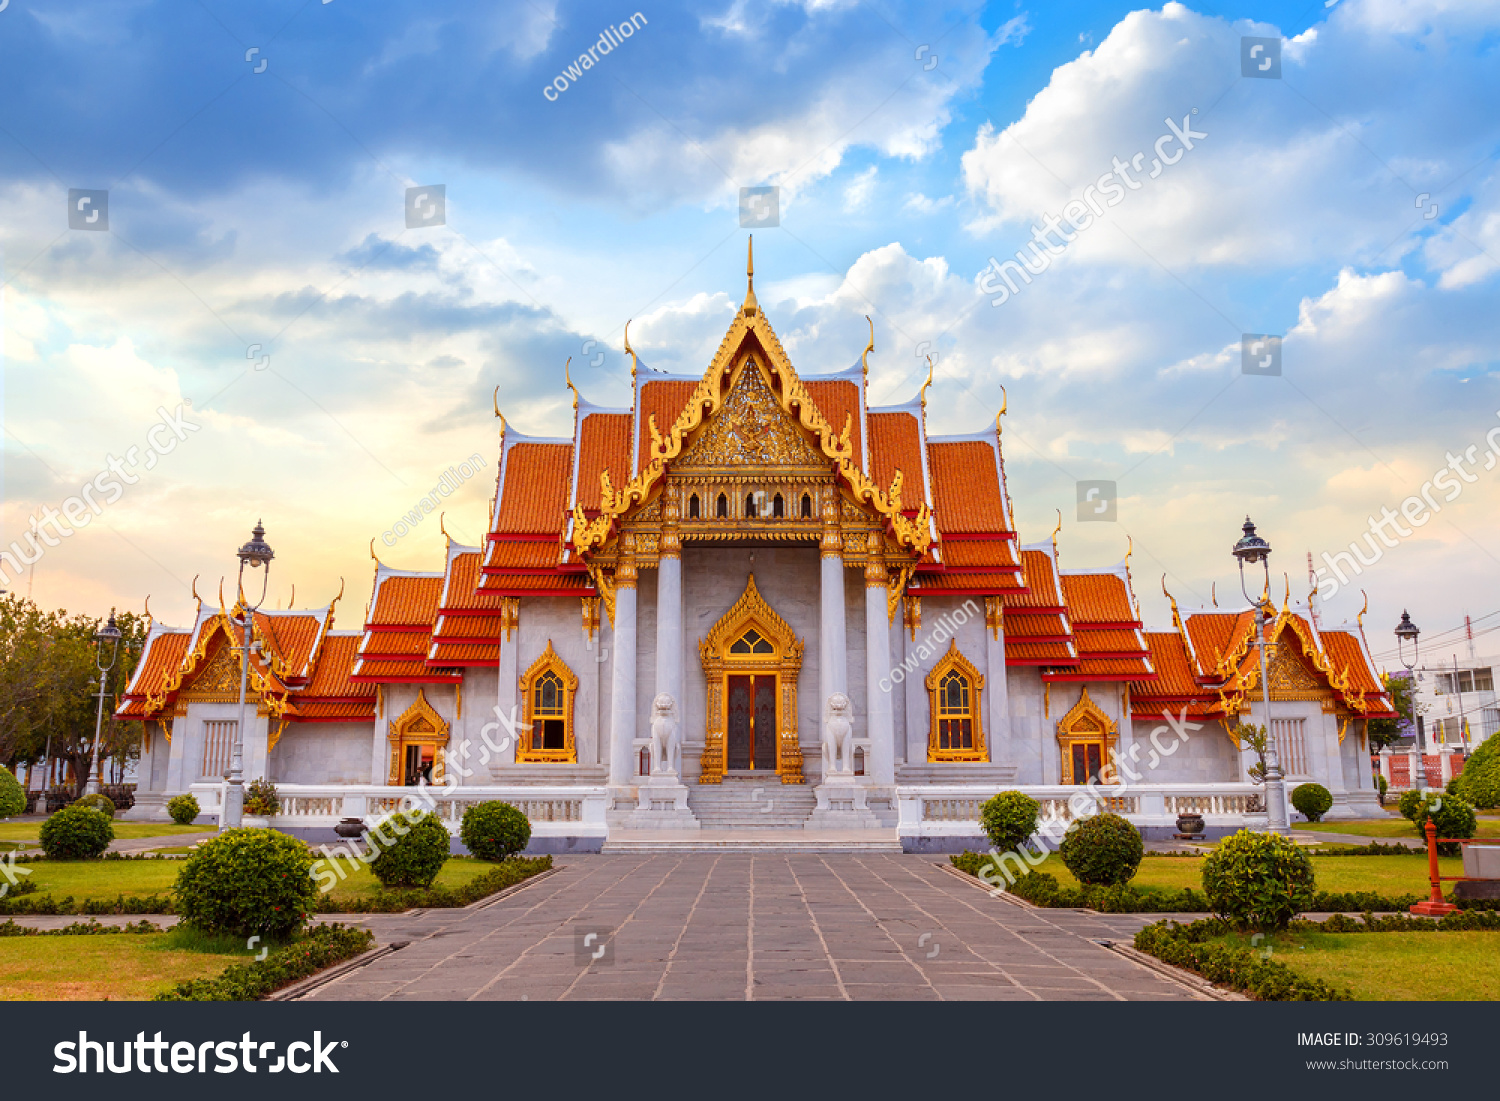 The Marble Temple, Wat Benchamabopit Dusitvanaram in Bangkok, Thailand

 #309619493